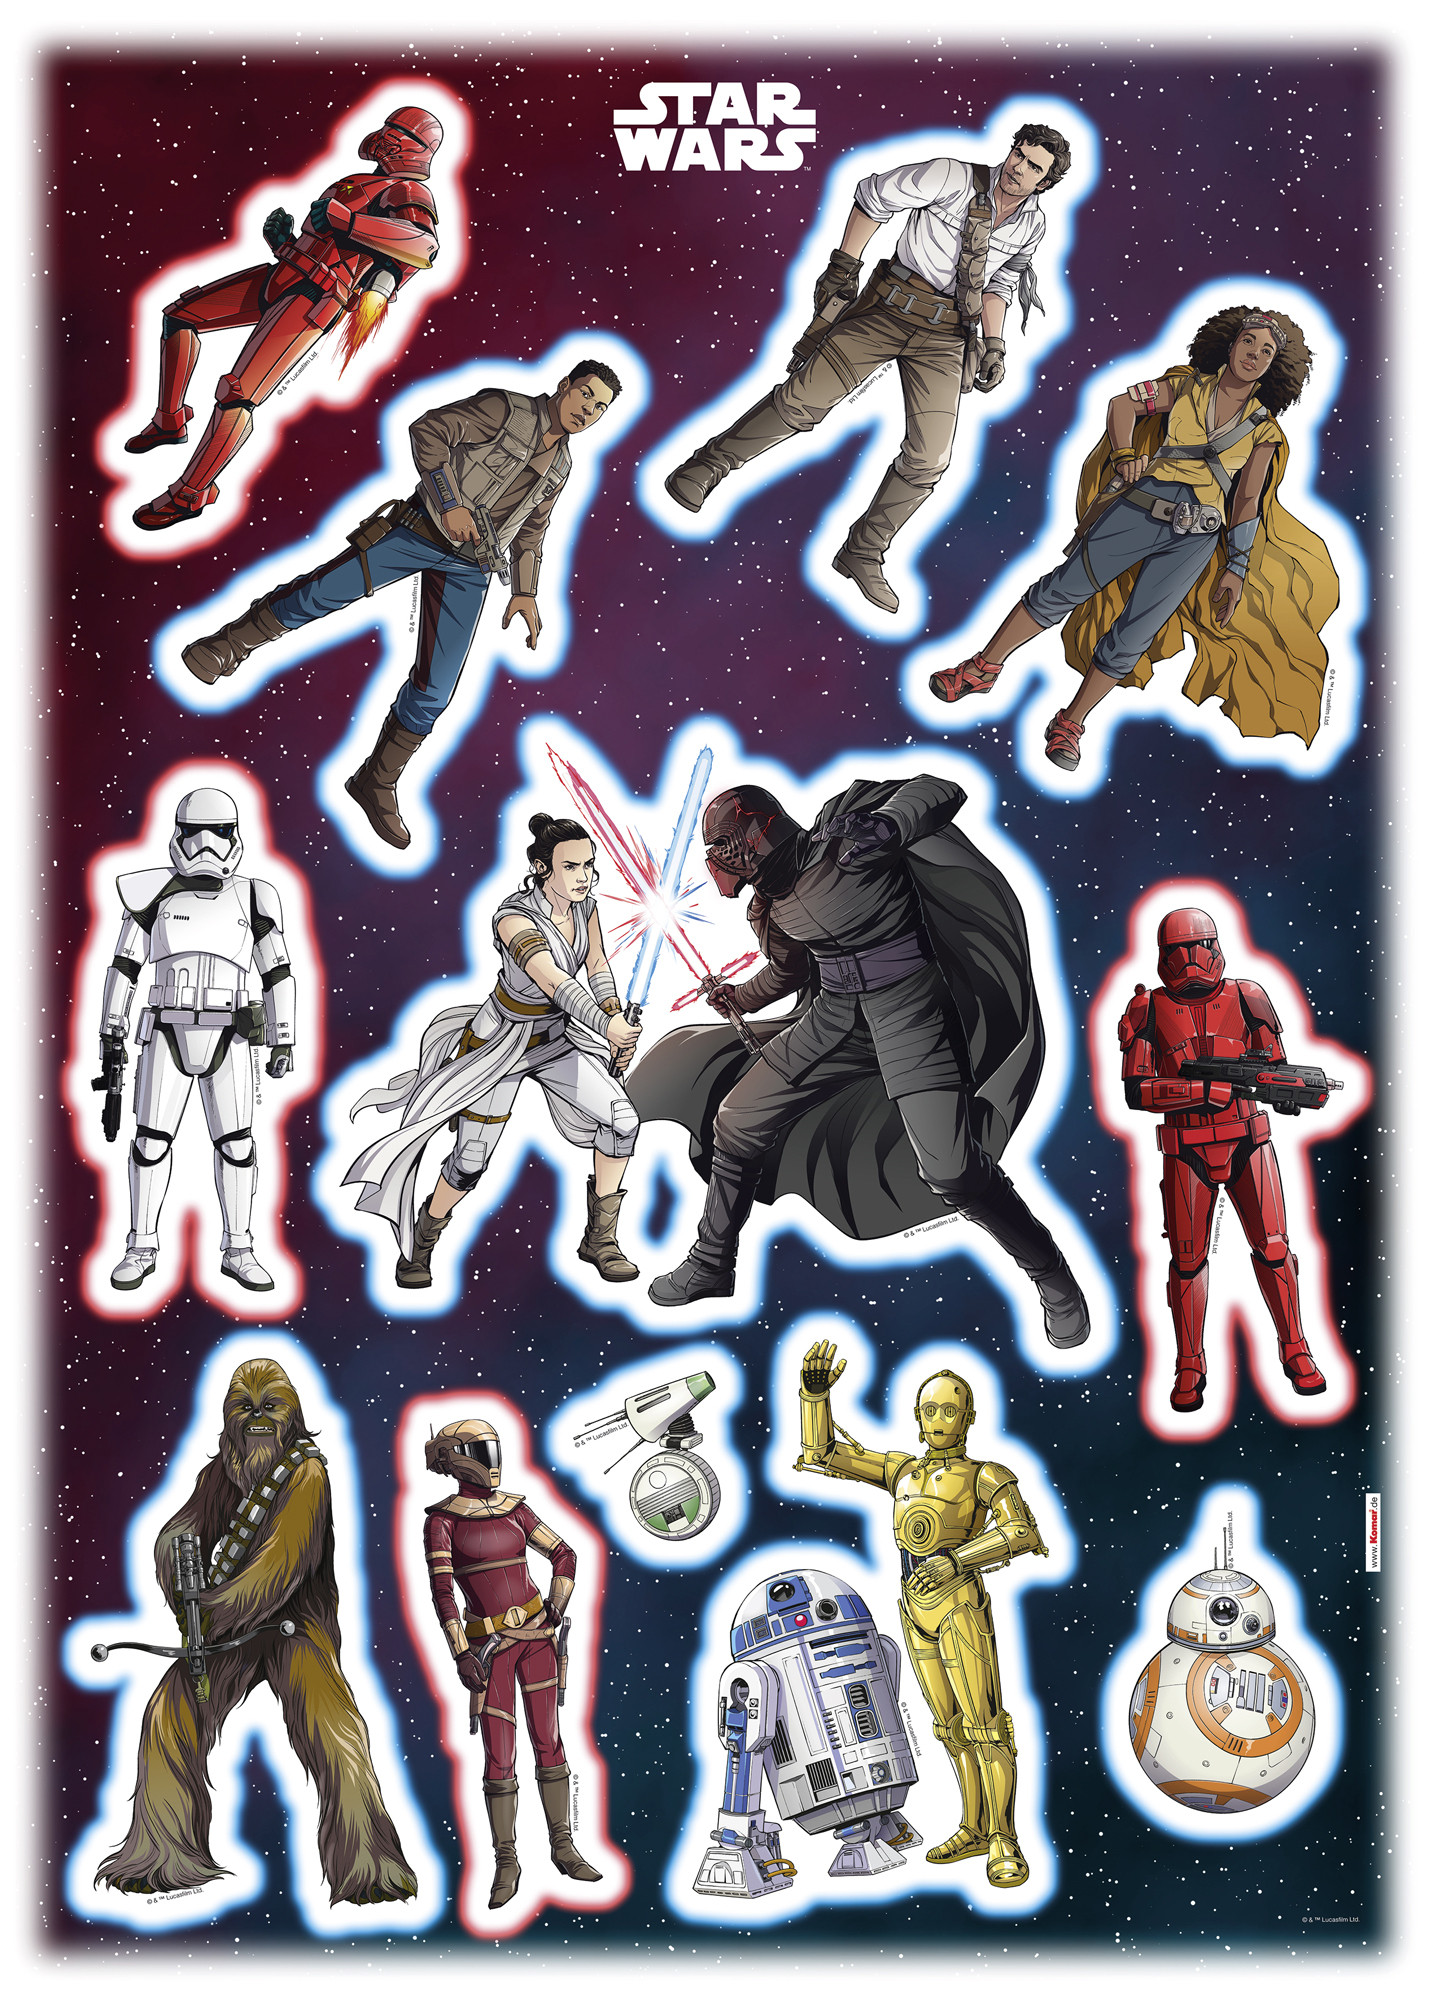 Sticker Mural Classique Star Wars Stickers Muraux